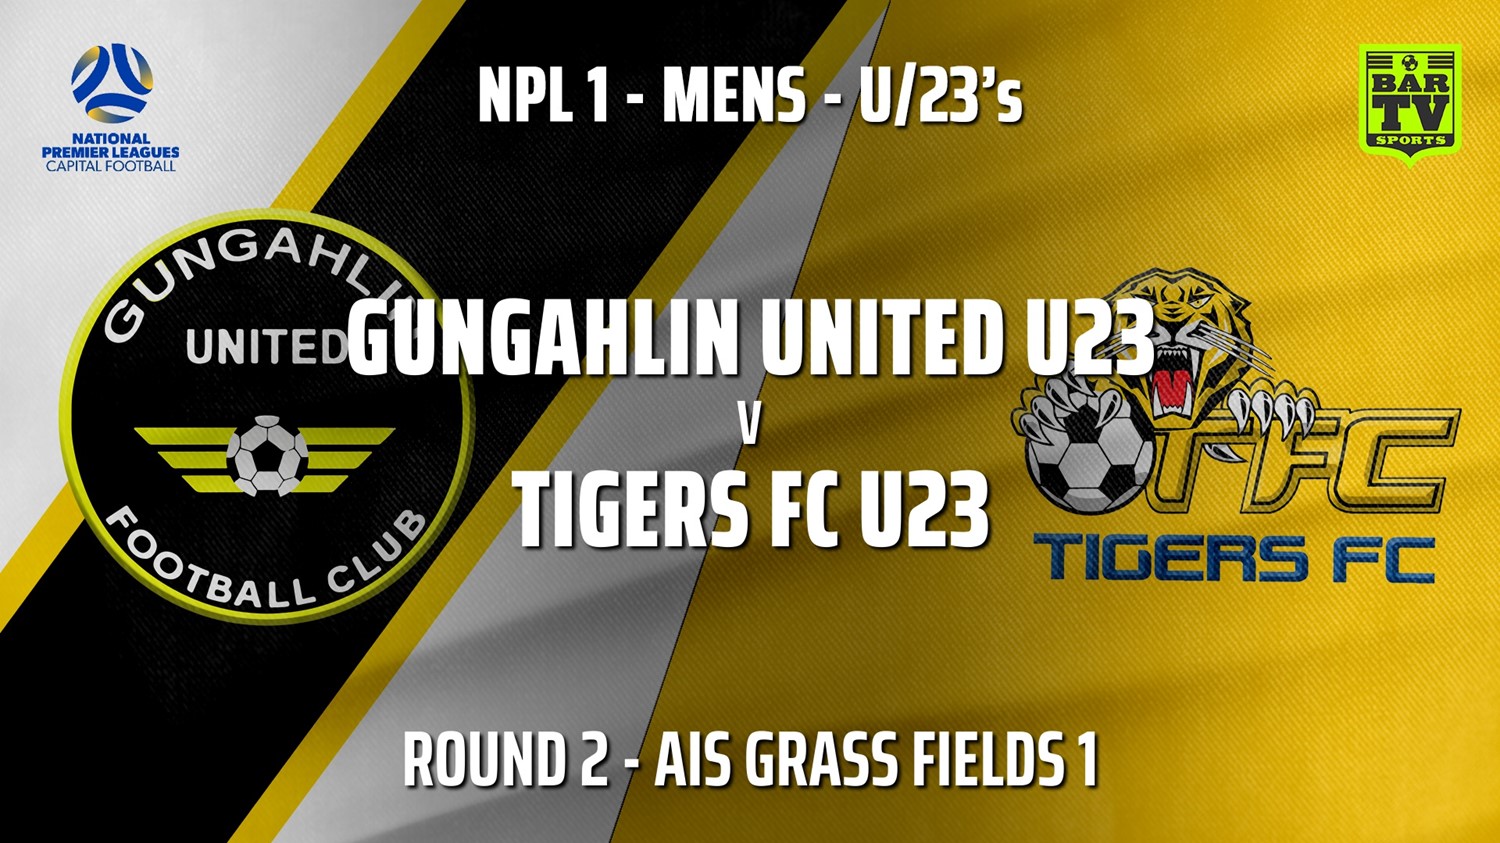 NPL1 Men - U23 - Capital Football  Round 2 - Gungahlin United U23 v Tigers FC U23 Minigame Slate Image